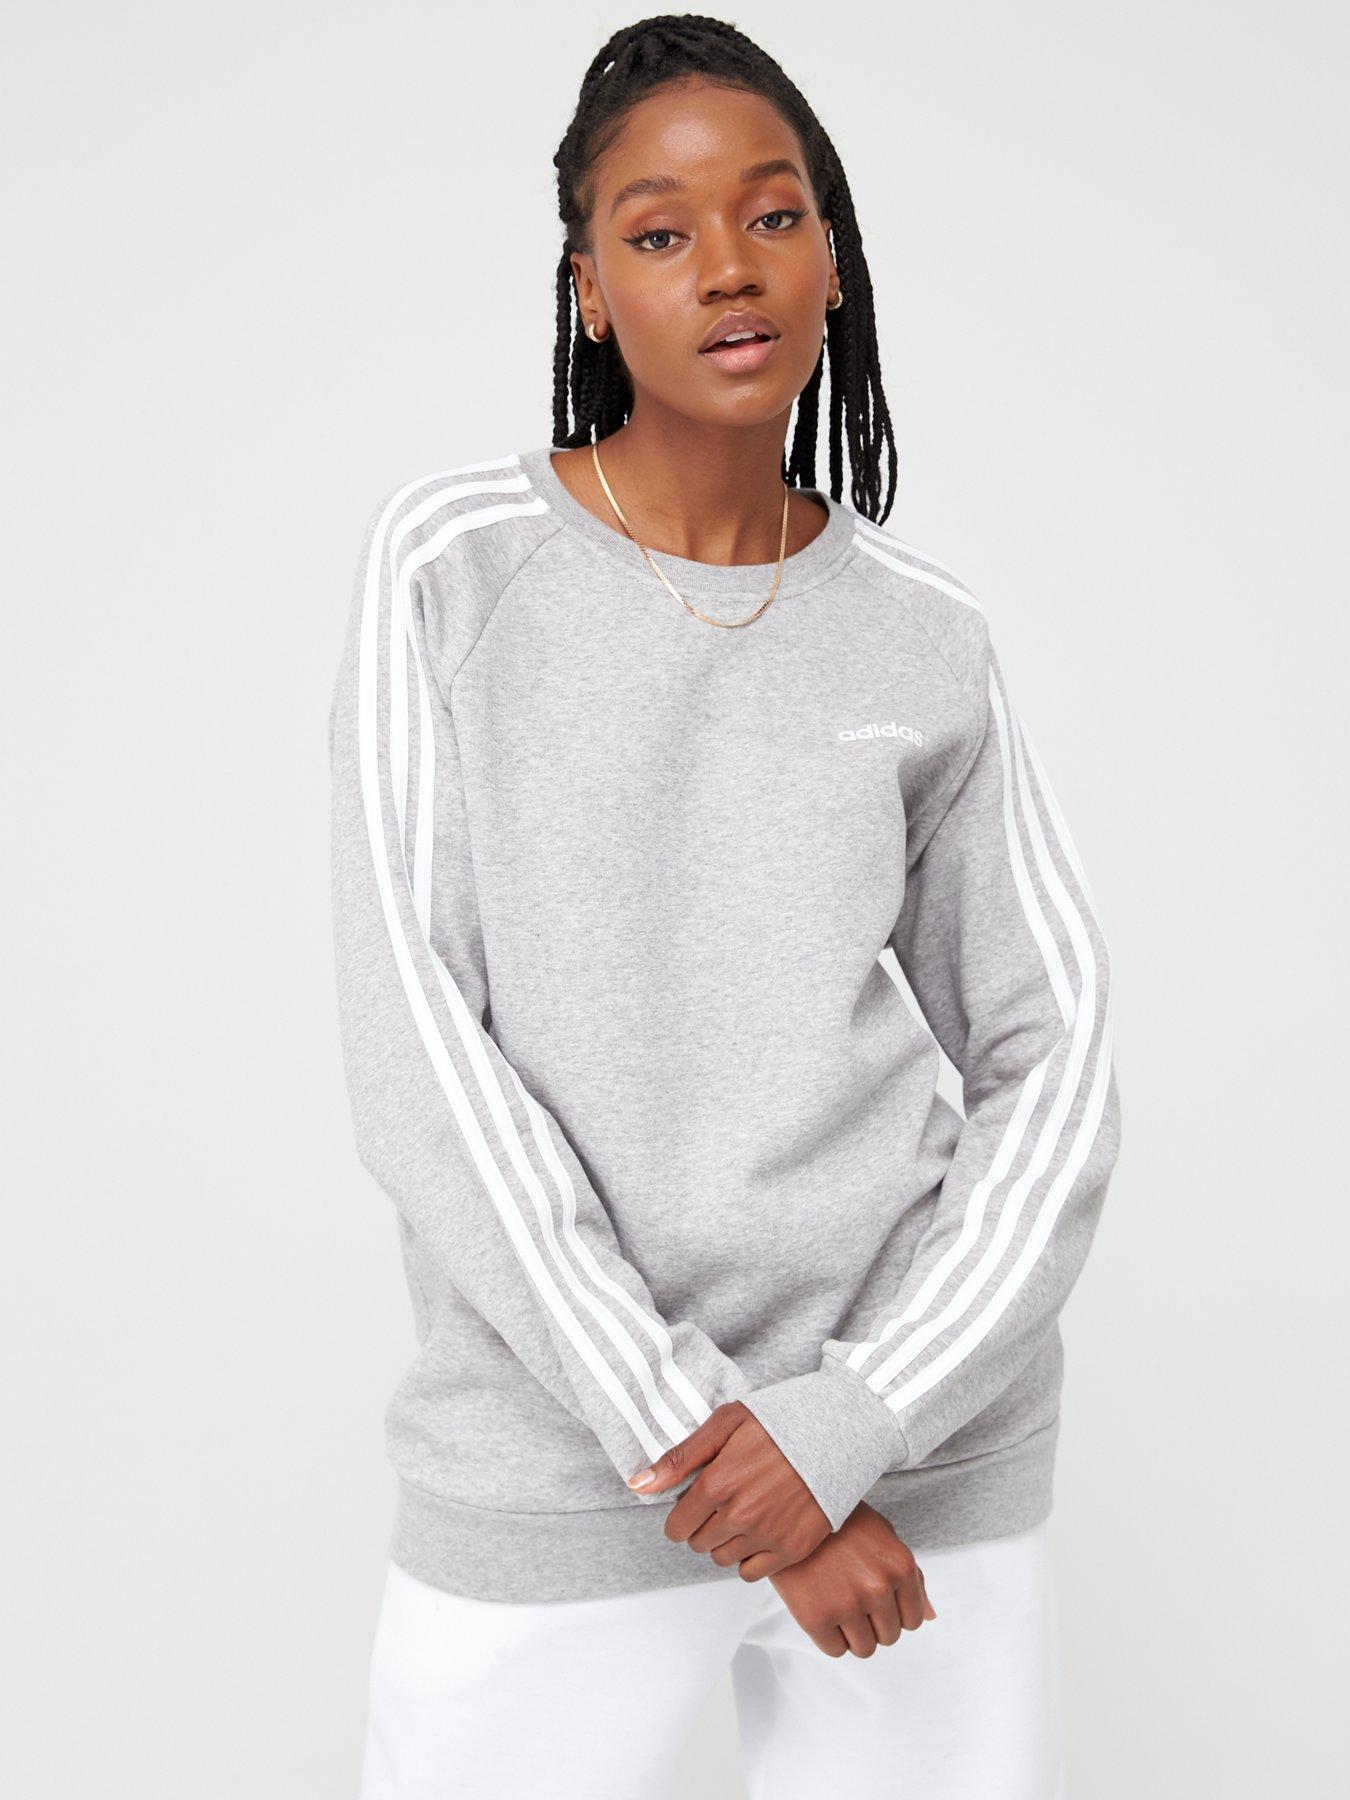 womens gray adidas hoodie